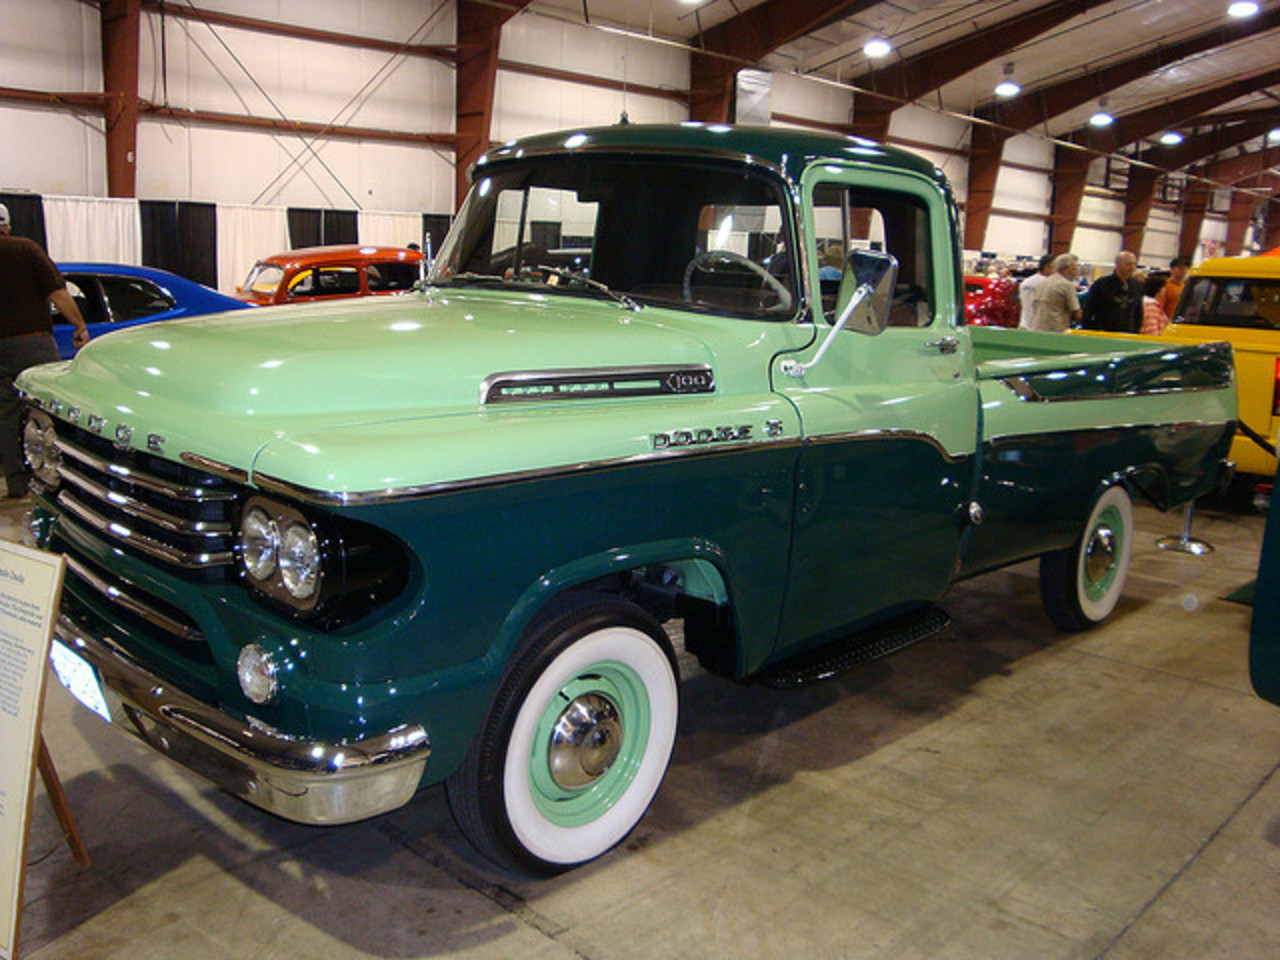 1958 Dodge 100 Sweptside Pickup Truck | Flickr - Photo Sharing!